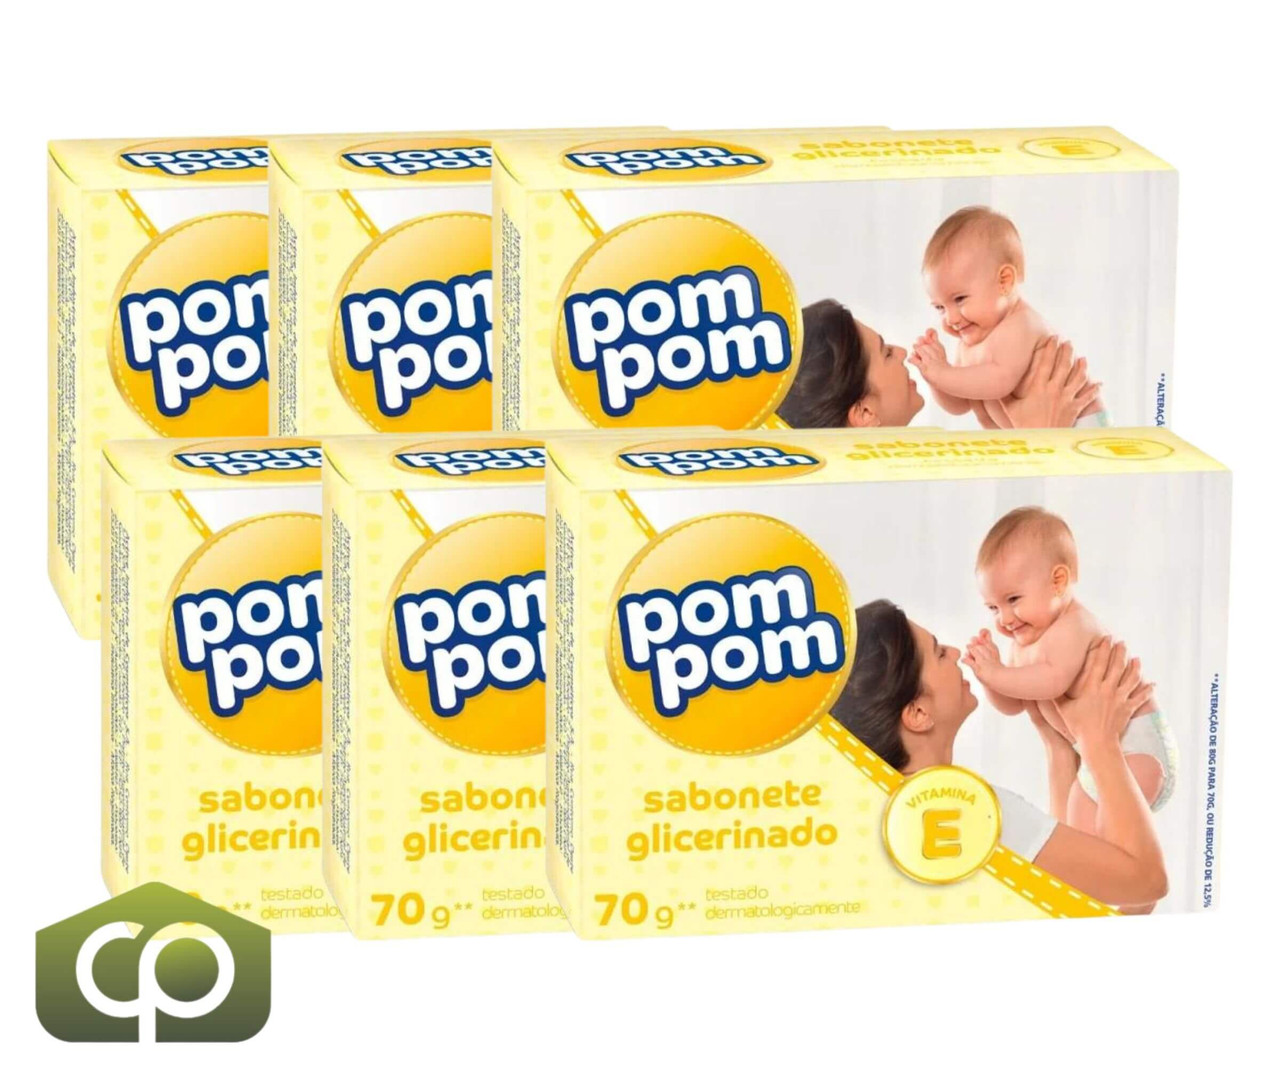 POMPOM Glycerine Soap Bar 6 CASE - 12 Bars of 70g Each | Glycerine Soap for Skin - Chicken Pieces